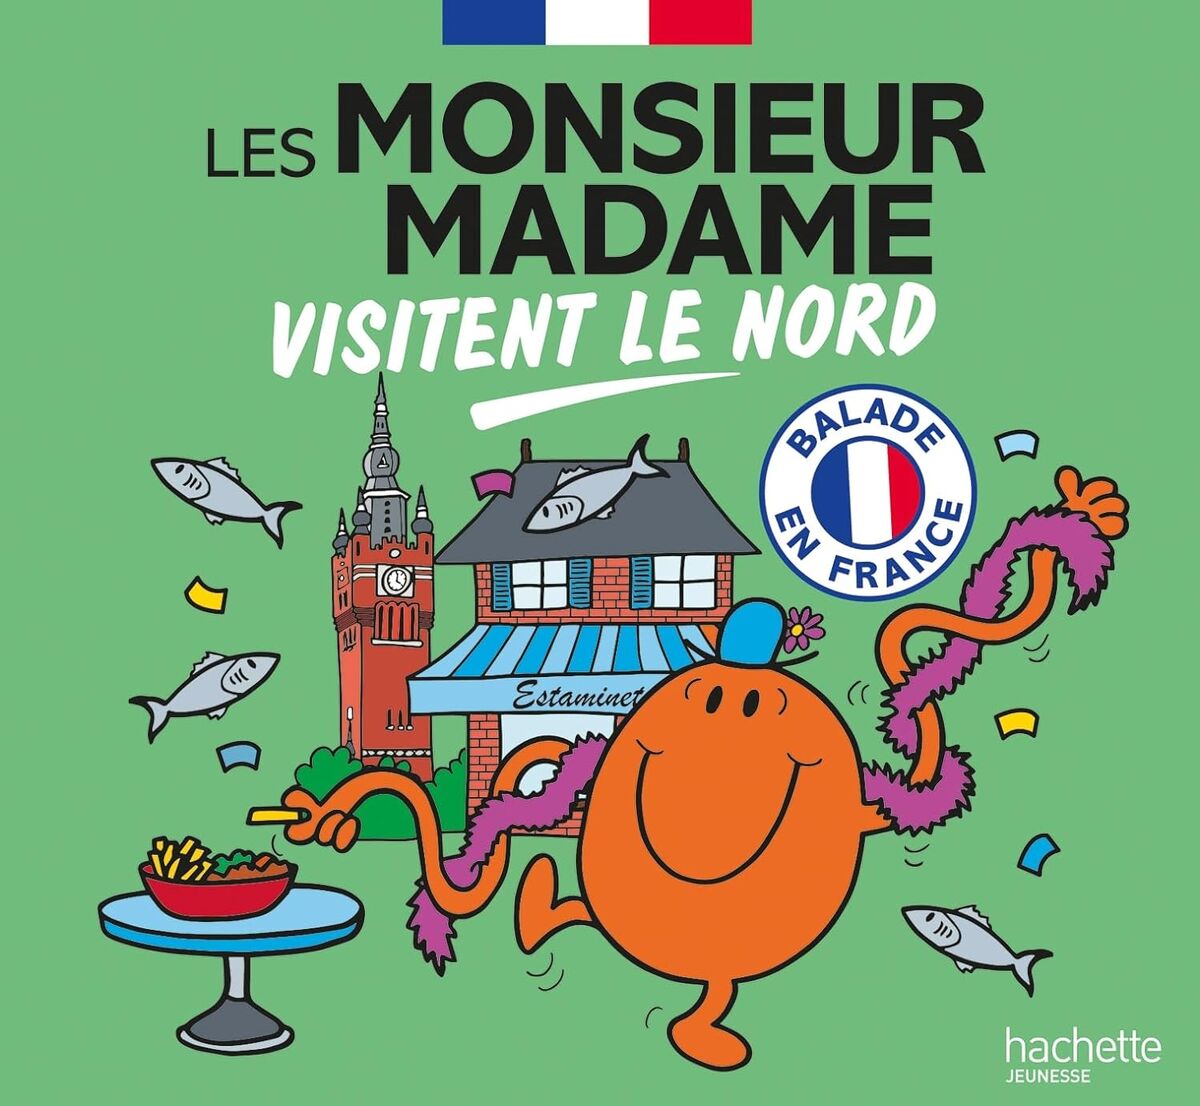 Monsieur Madame (Mr. Men Little Miss France), Mr. Men Wiki